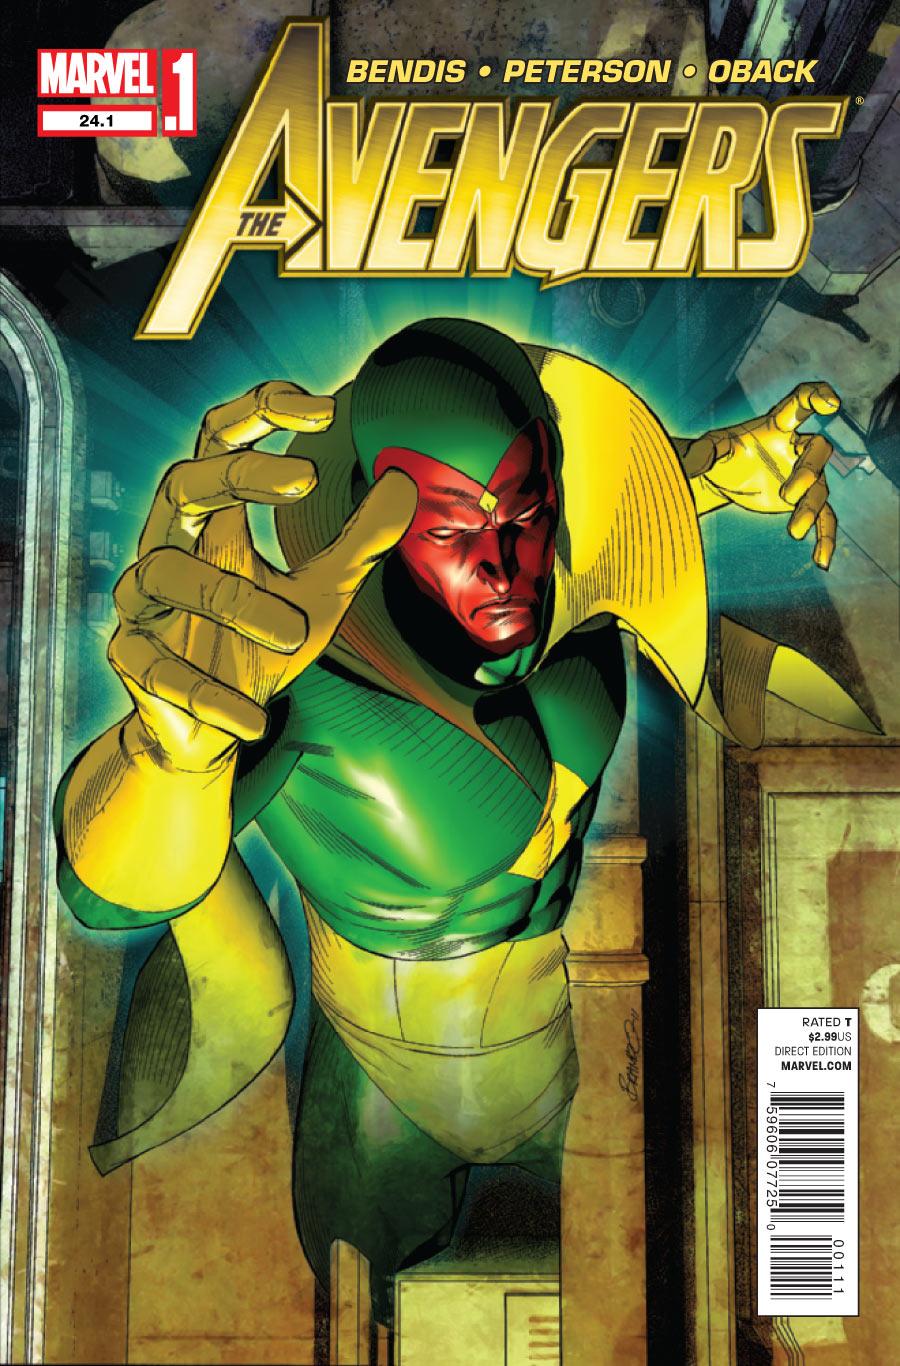 The Avengers Vol. 4 #24.1